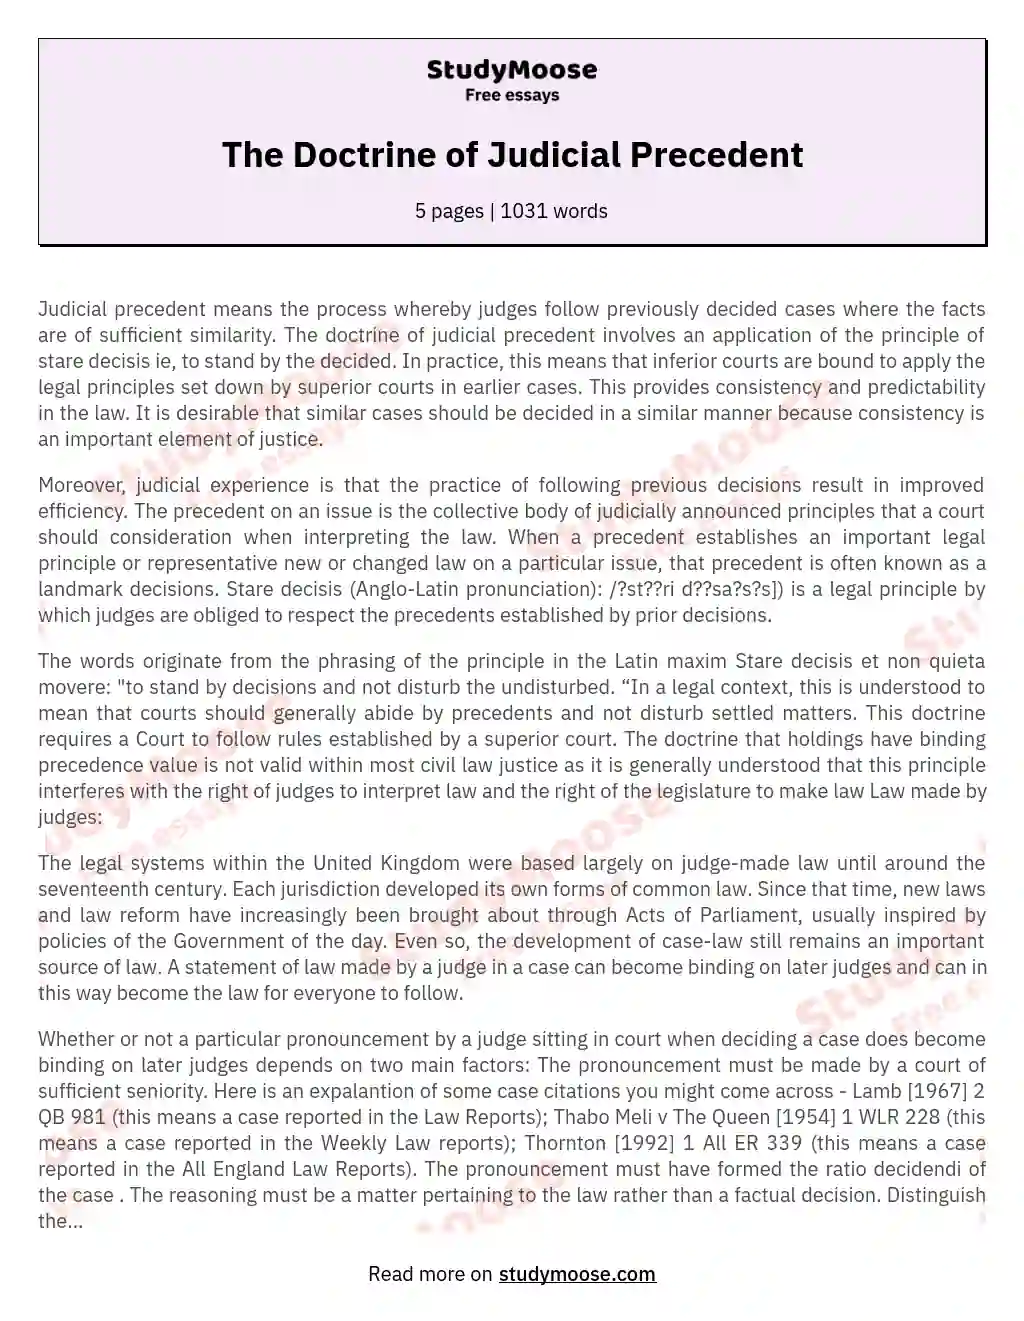 judicial precedent essay law teacher